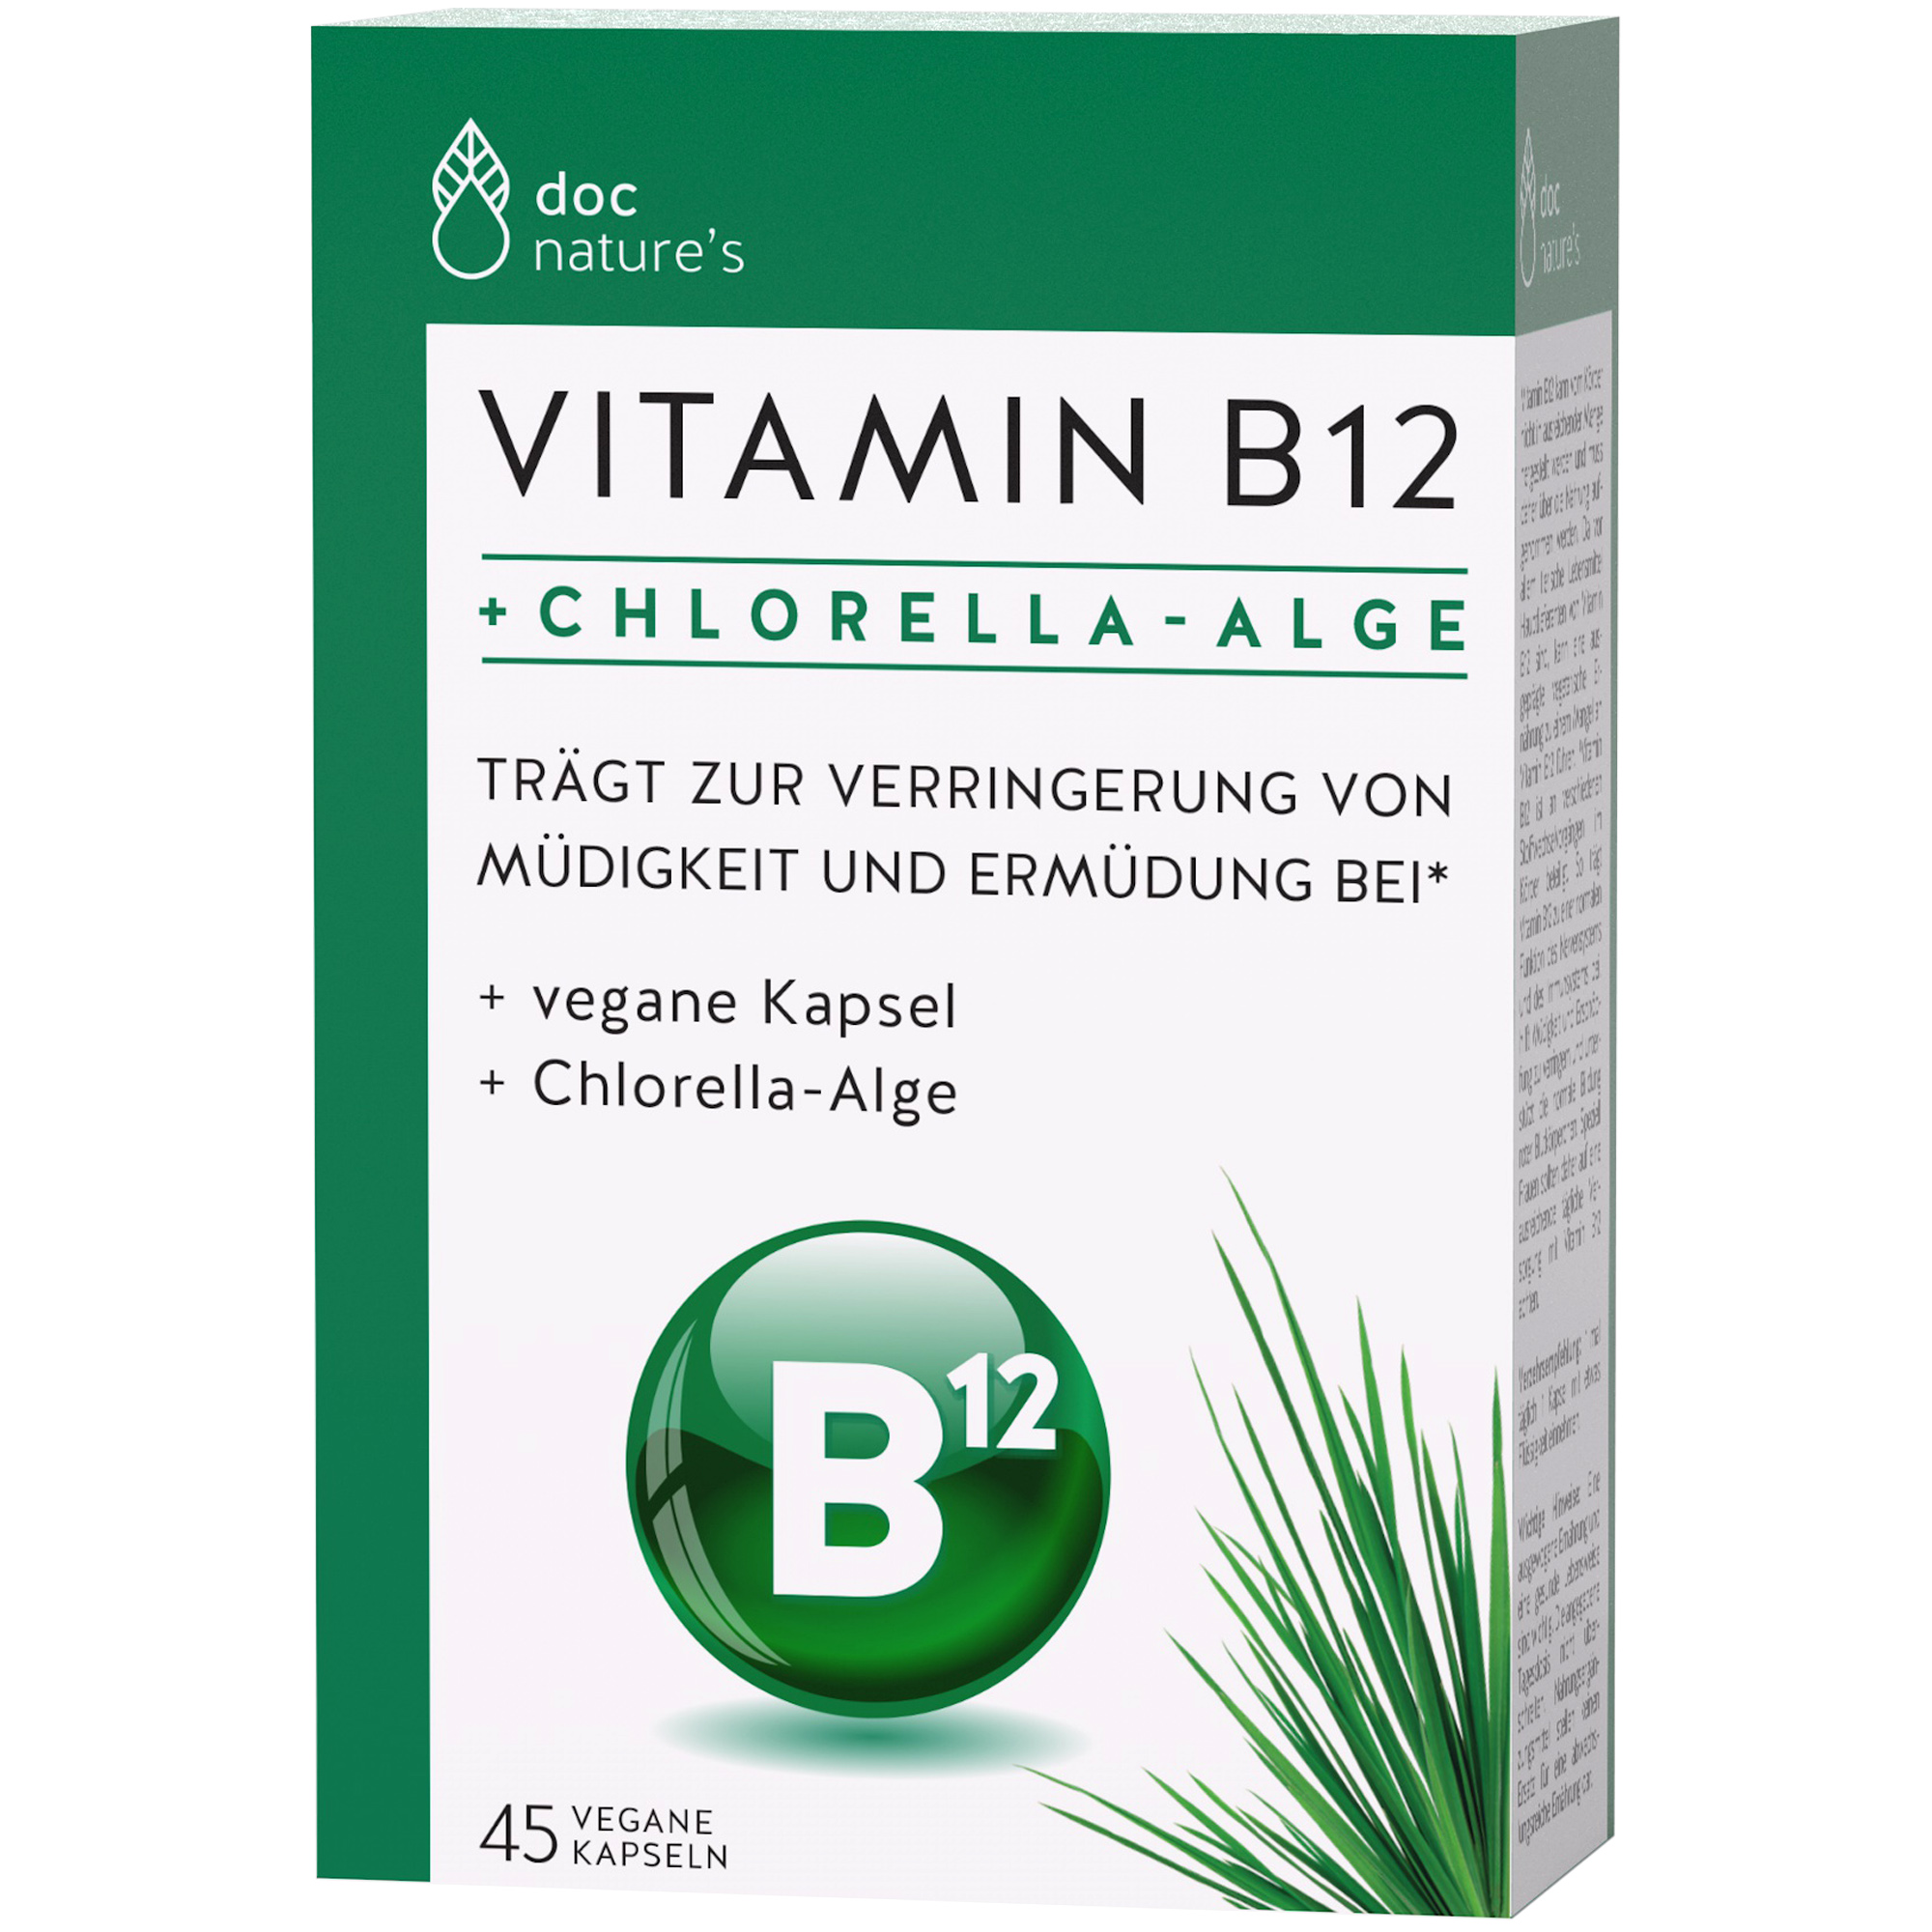 doc nature’s Vitamin B12 + Chlorella-Alge